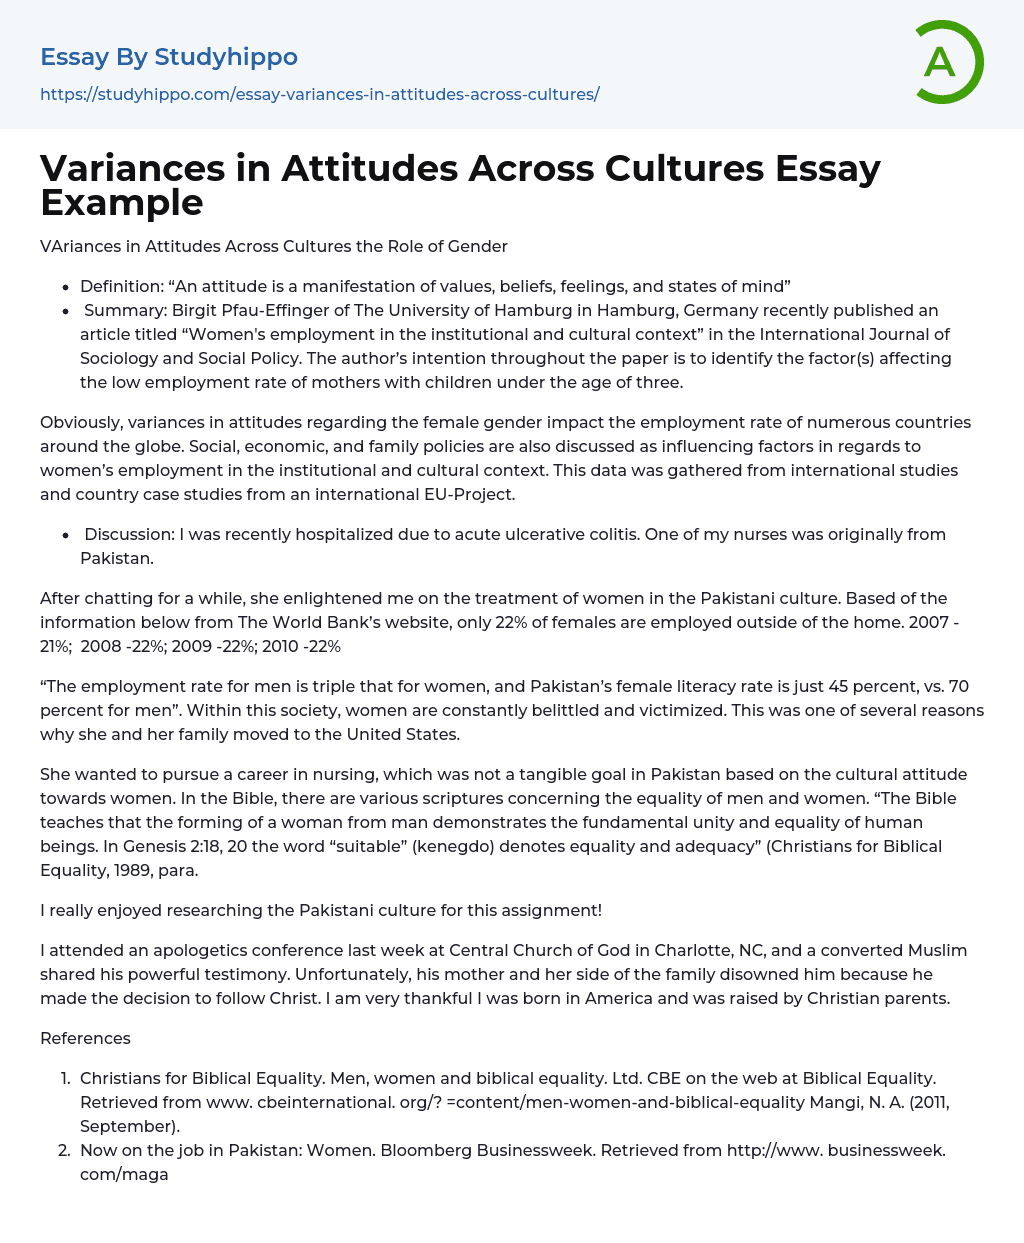 Variances in Attitudes Across Cultures Essay Example